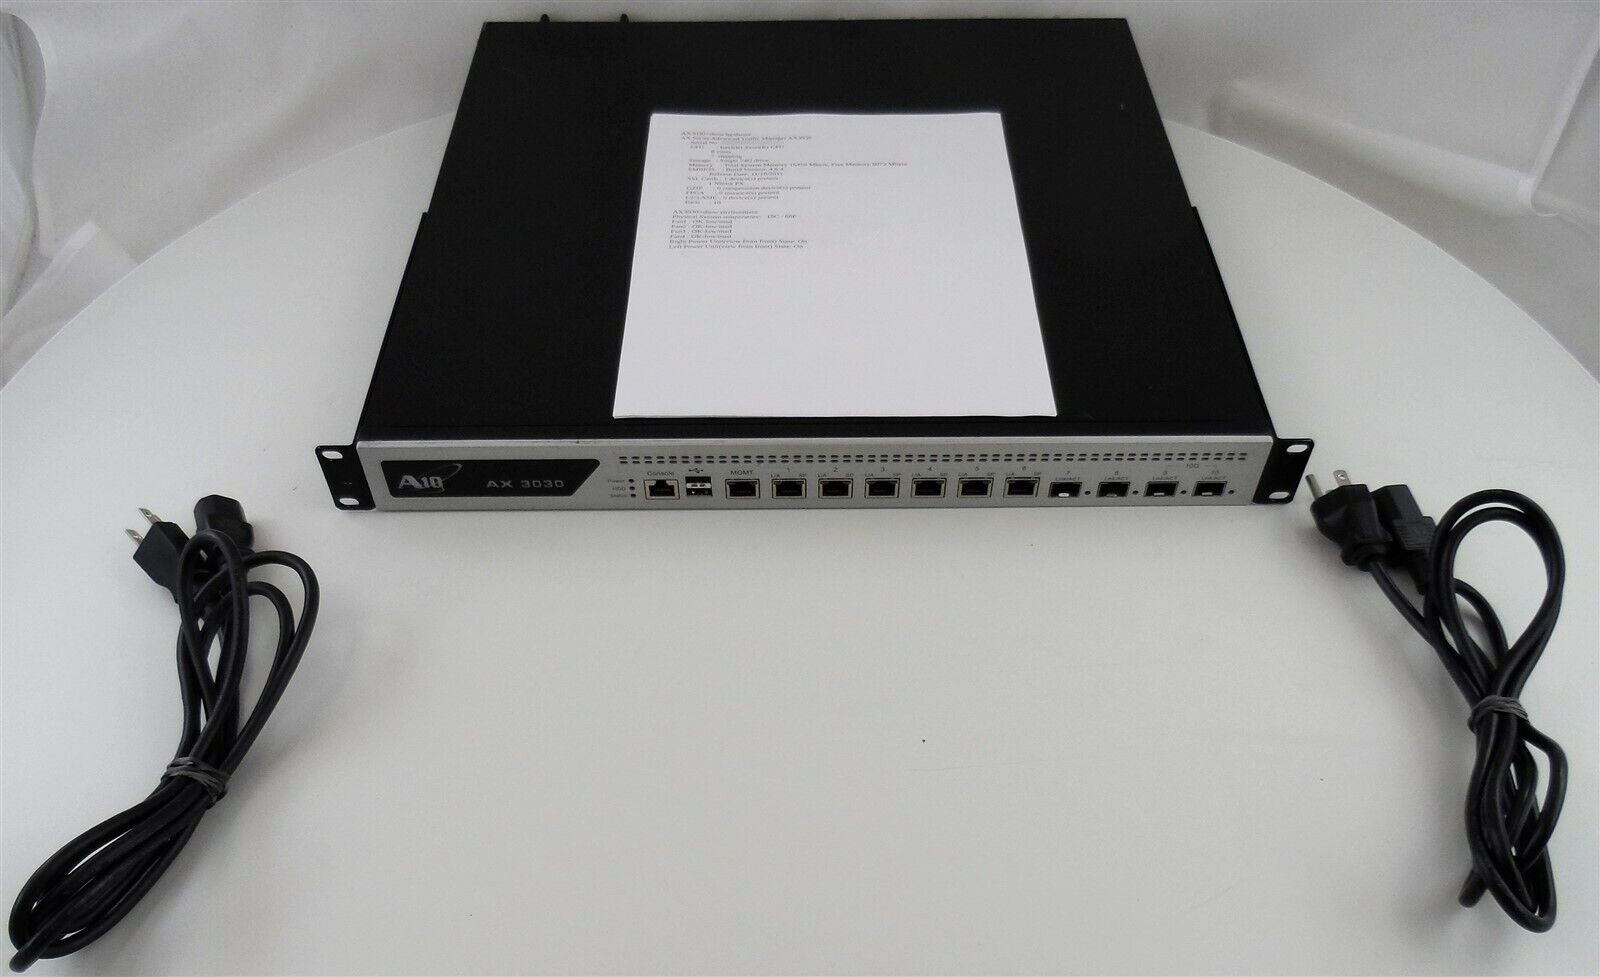 A10 Networks AX 3030 10Gb 64-bit ADC Load Balancer Dual PSU Used